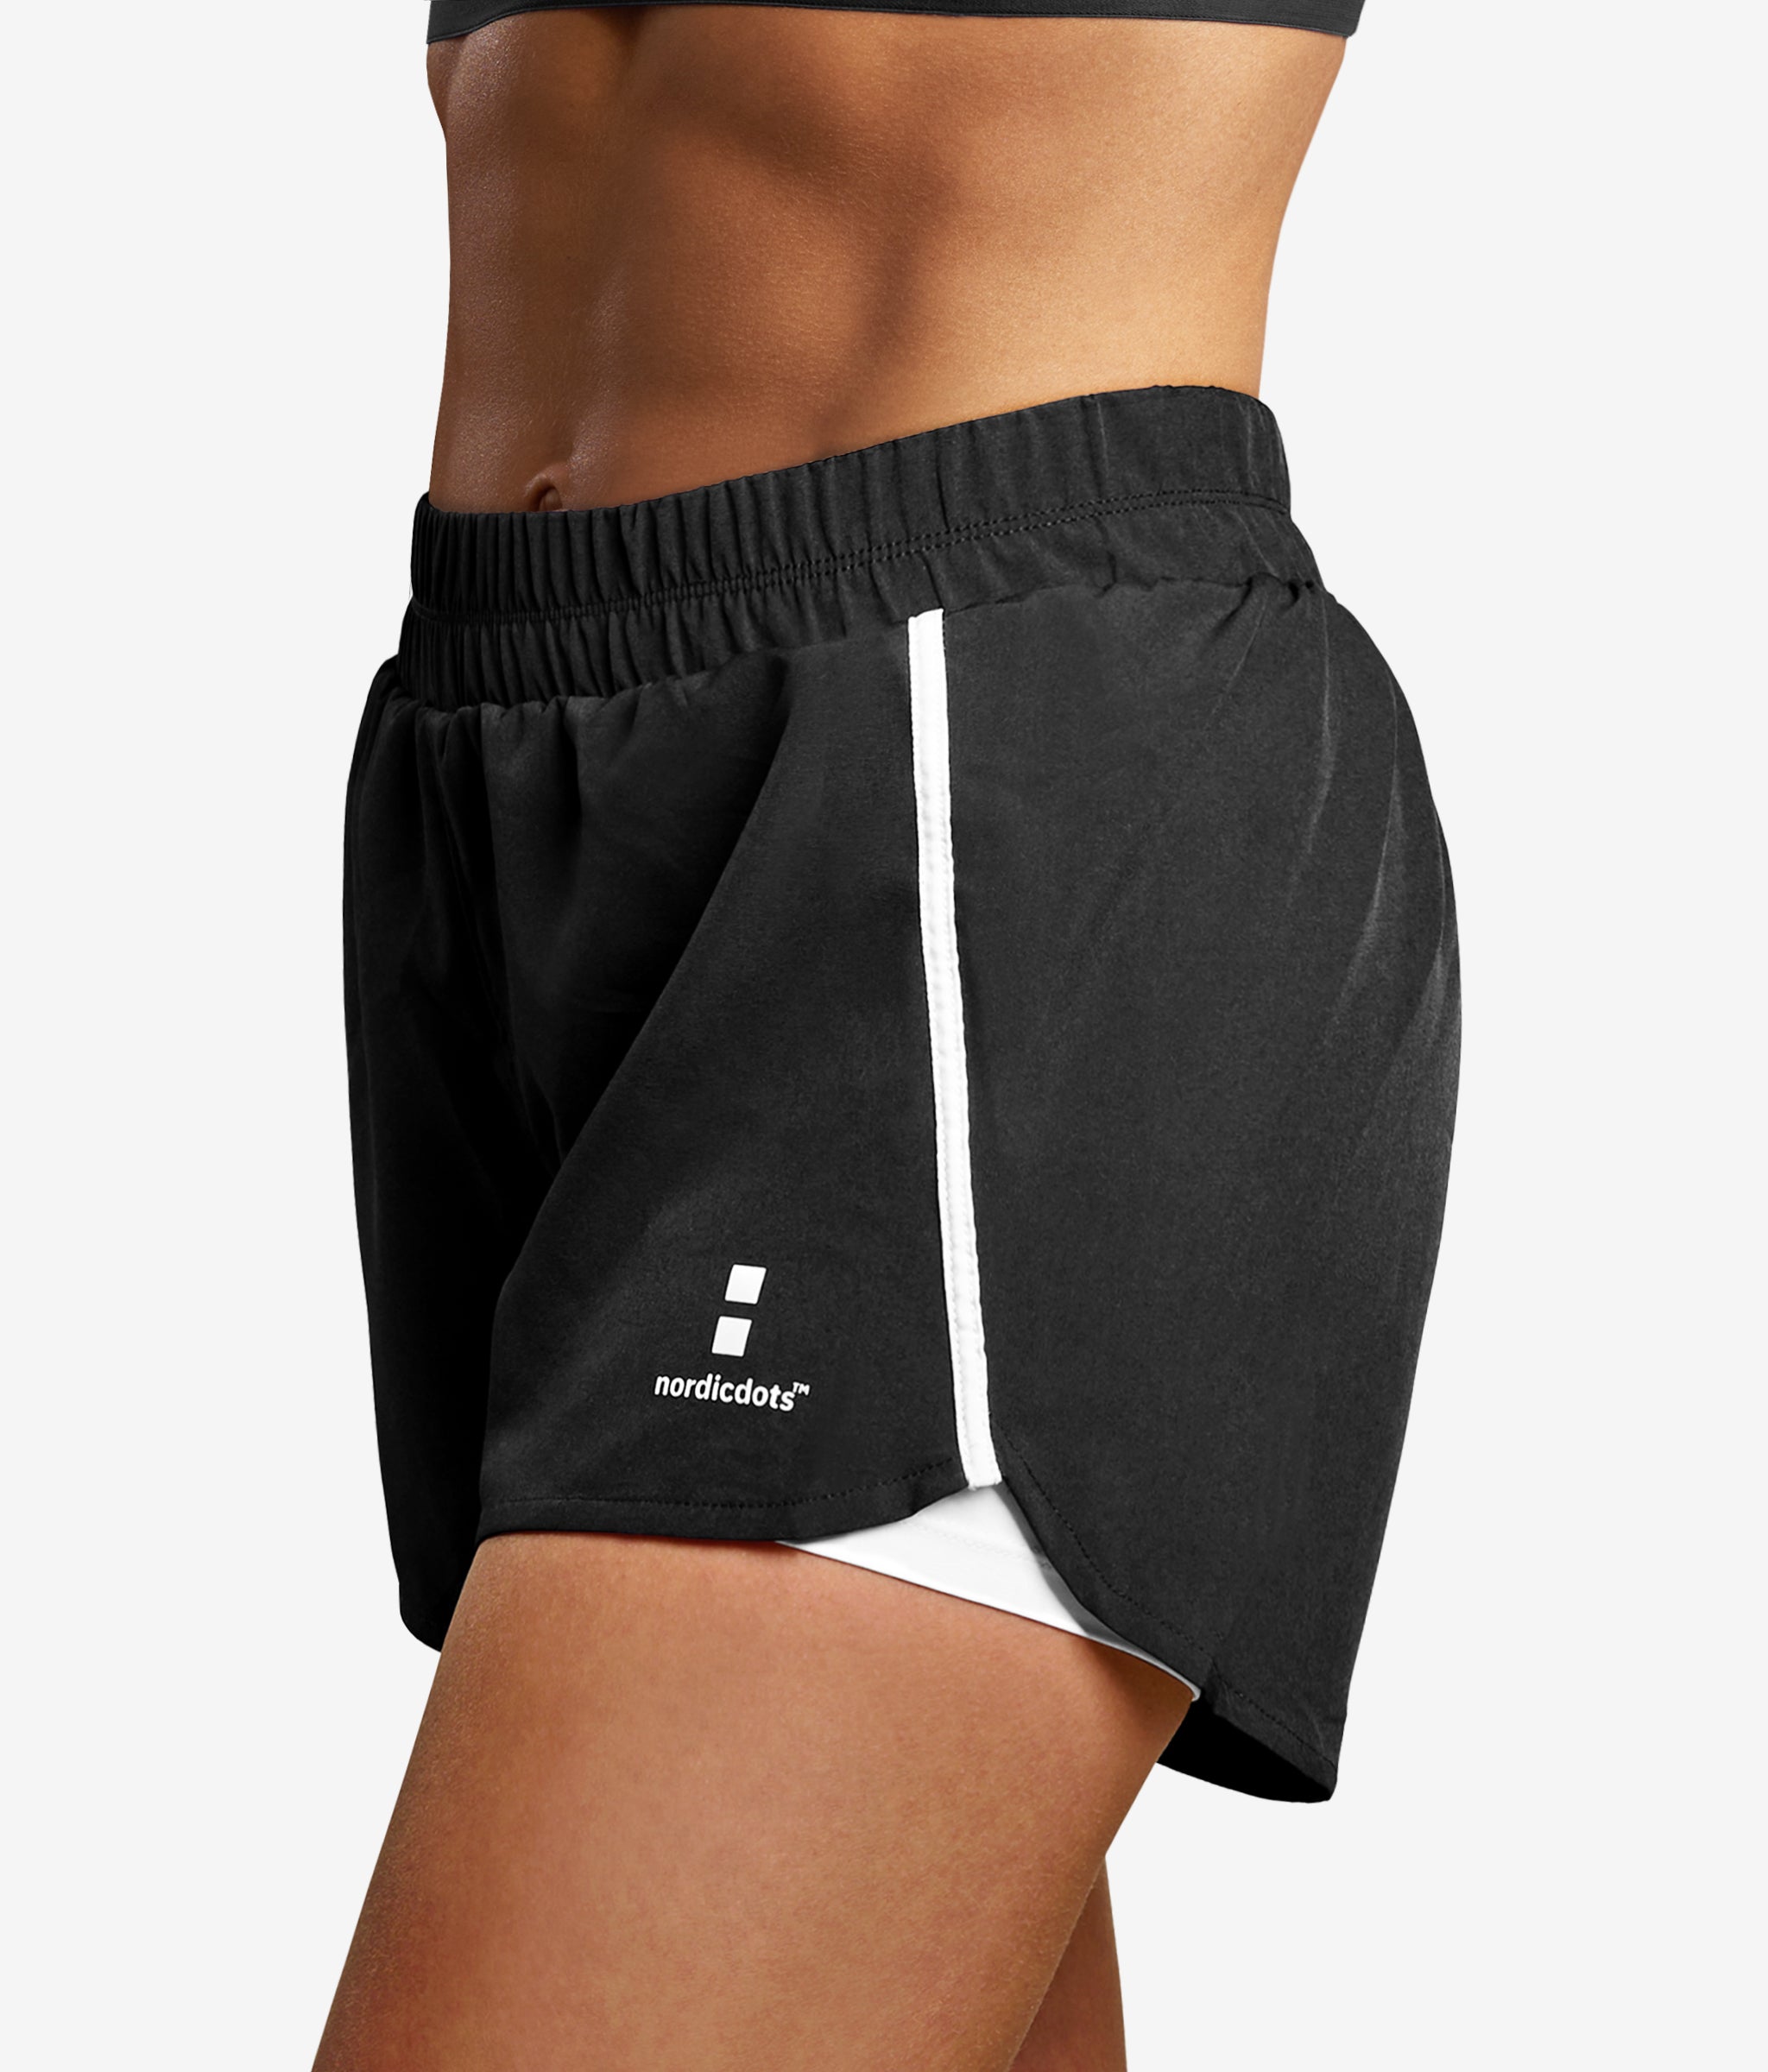 nordicdots women running tennis padel shorts